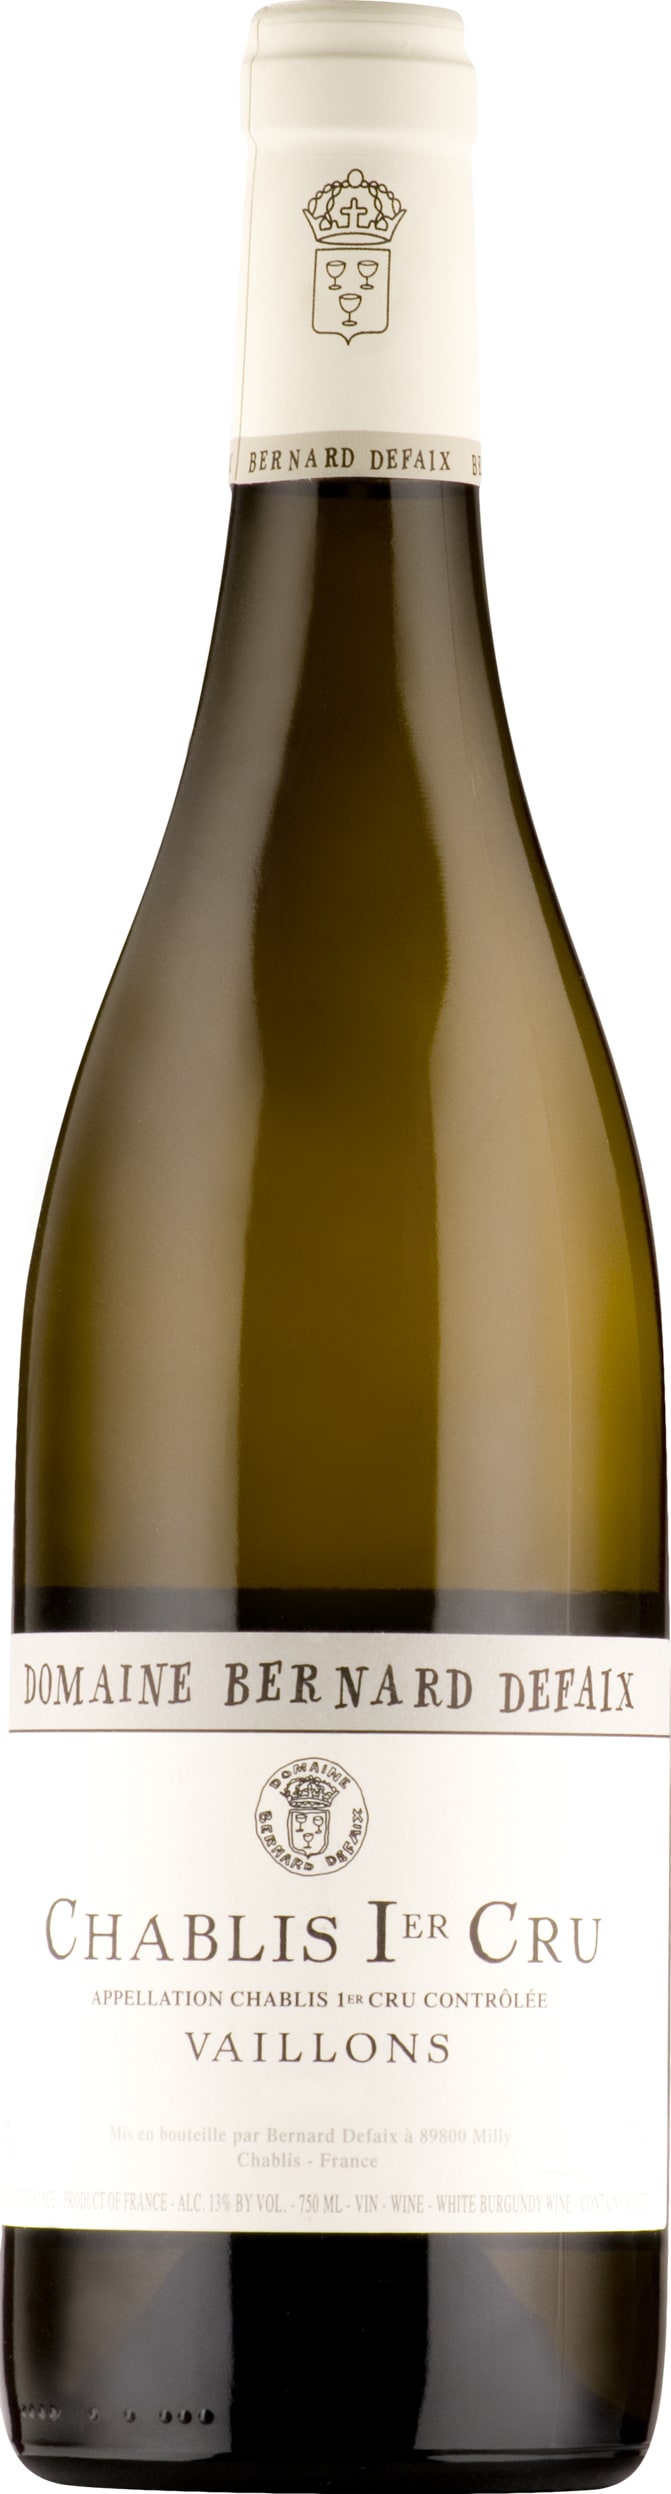 Bernard Defaix Chablis Premier Cru Vaillons 2022 75cl - Buy Bernard Defaix Wines from GREAT WINES DIRECT wine shop